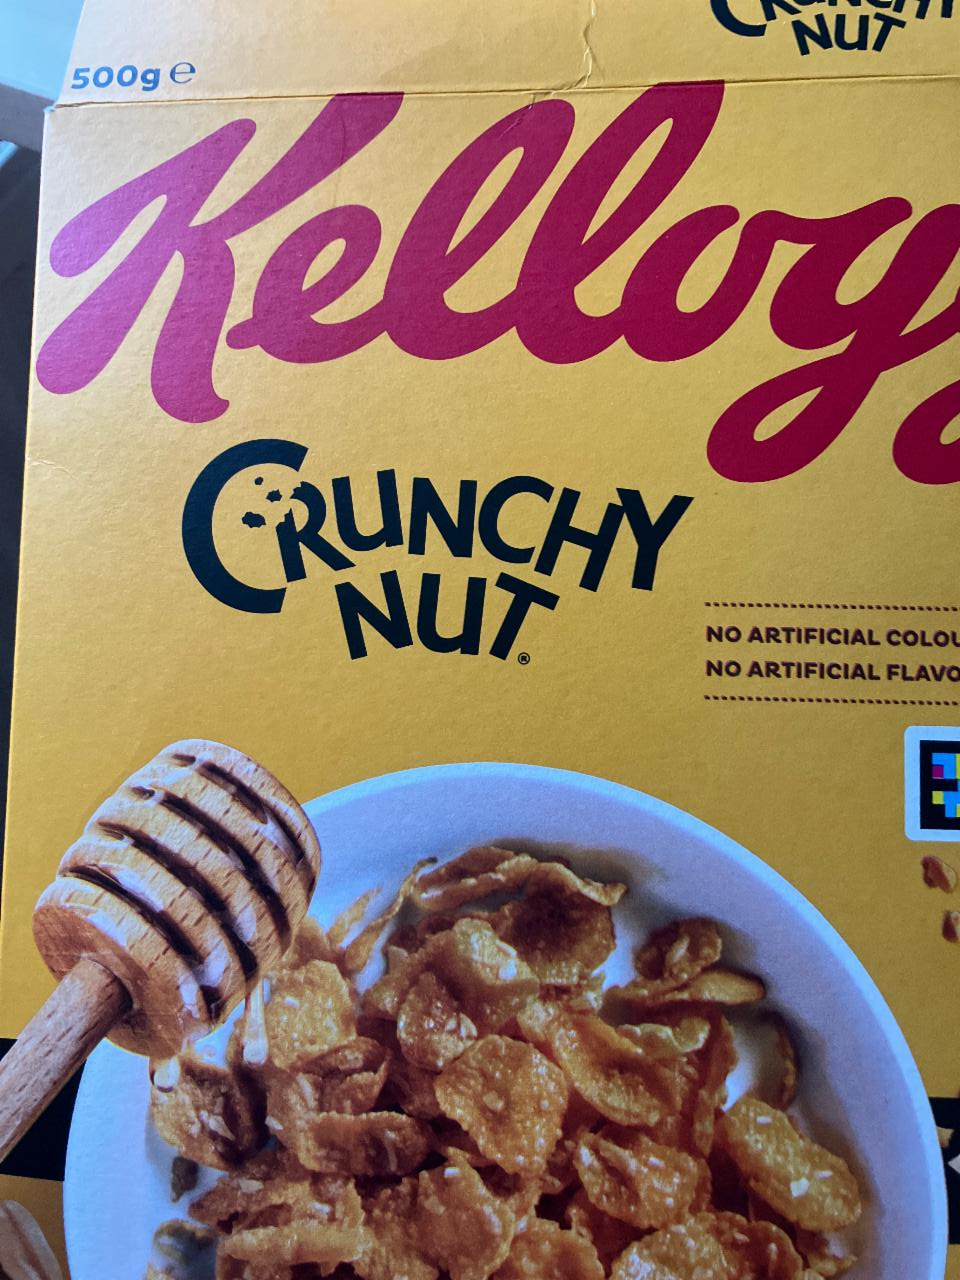 Fotografie - Crunchy nut Kellogg's